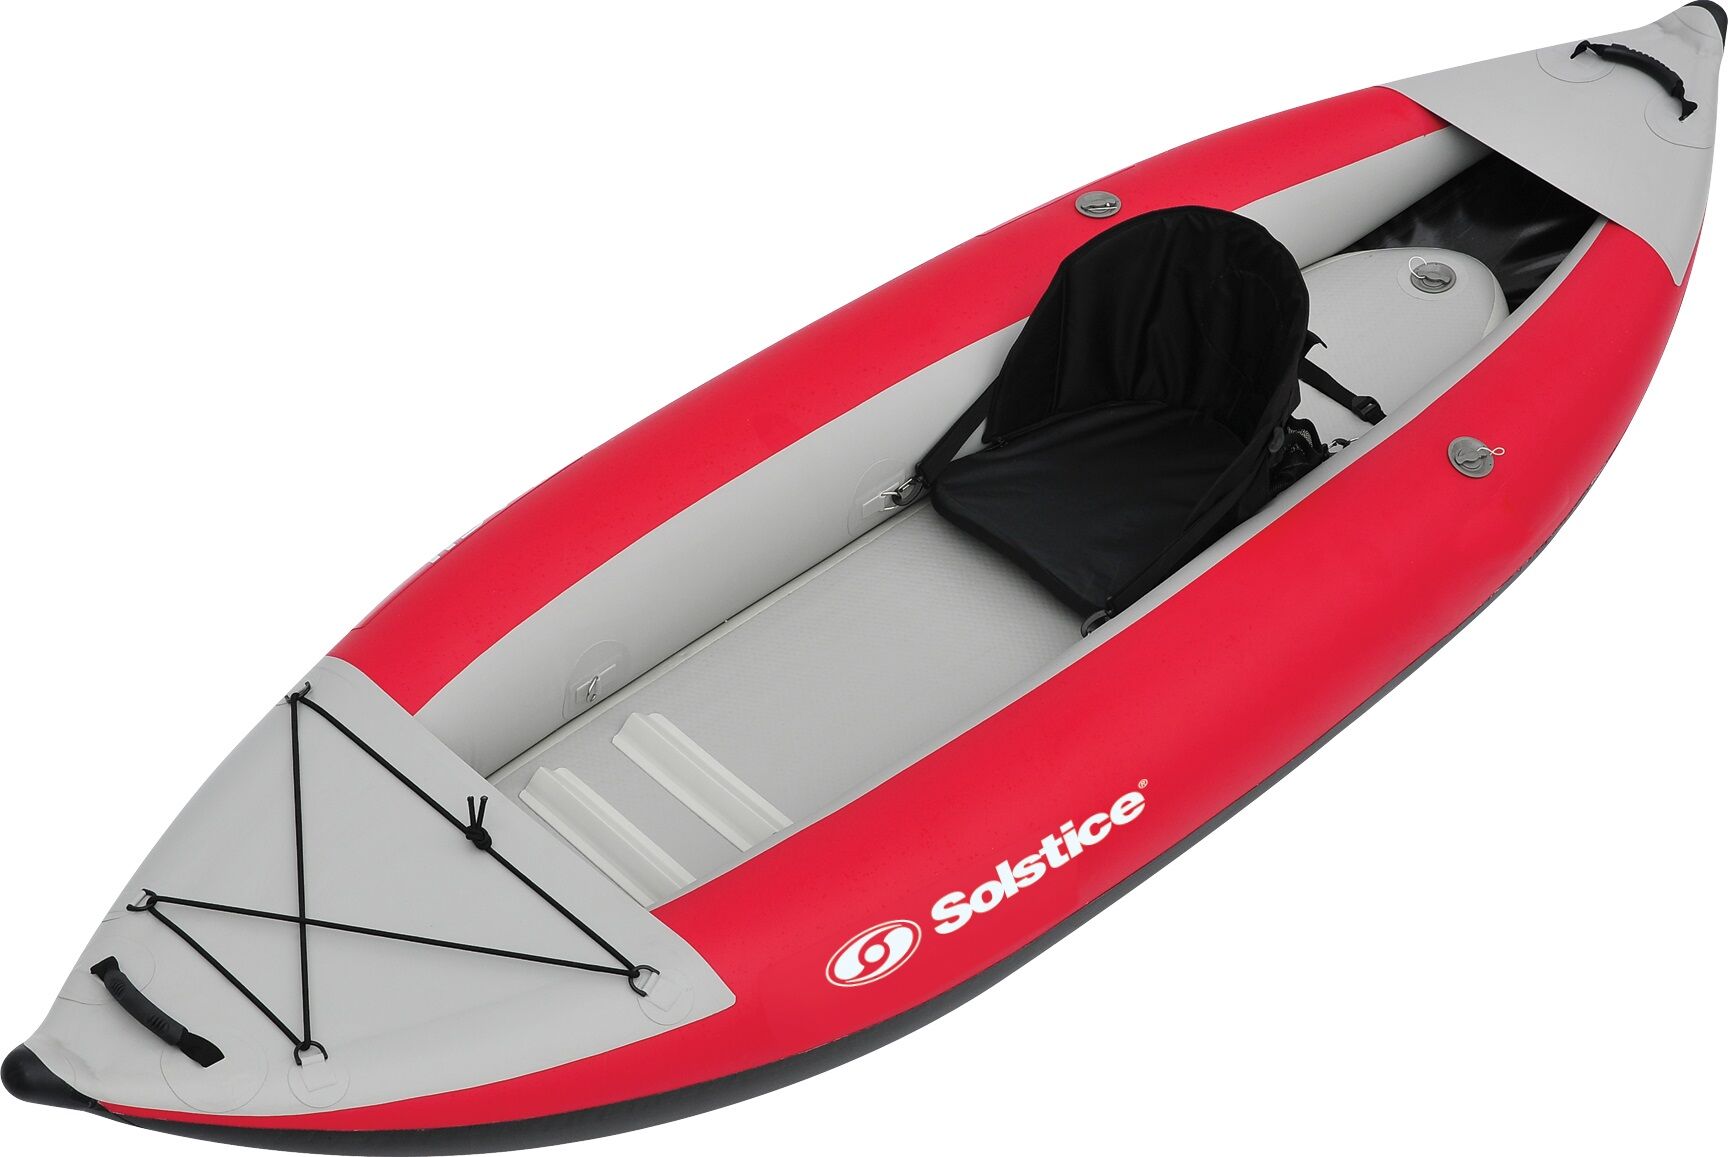 Solstice Flare 1p Whitewater Kayak